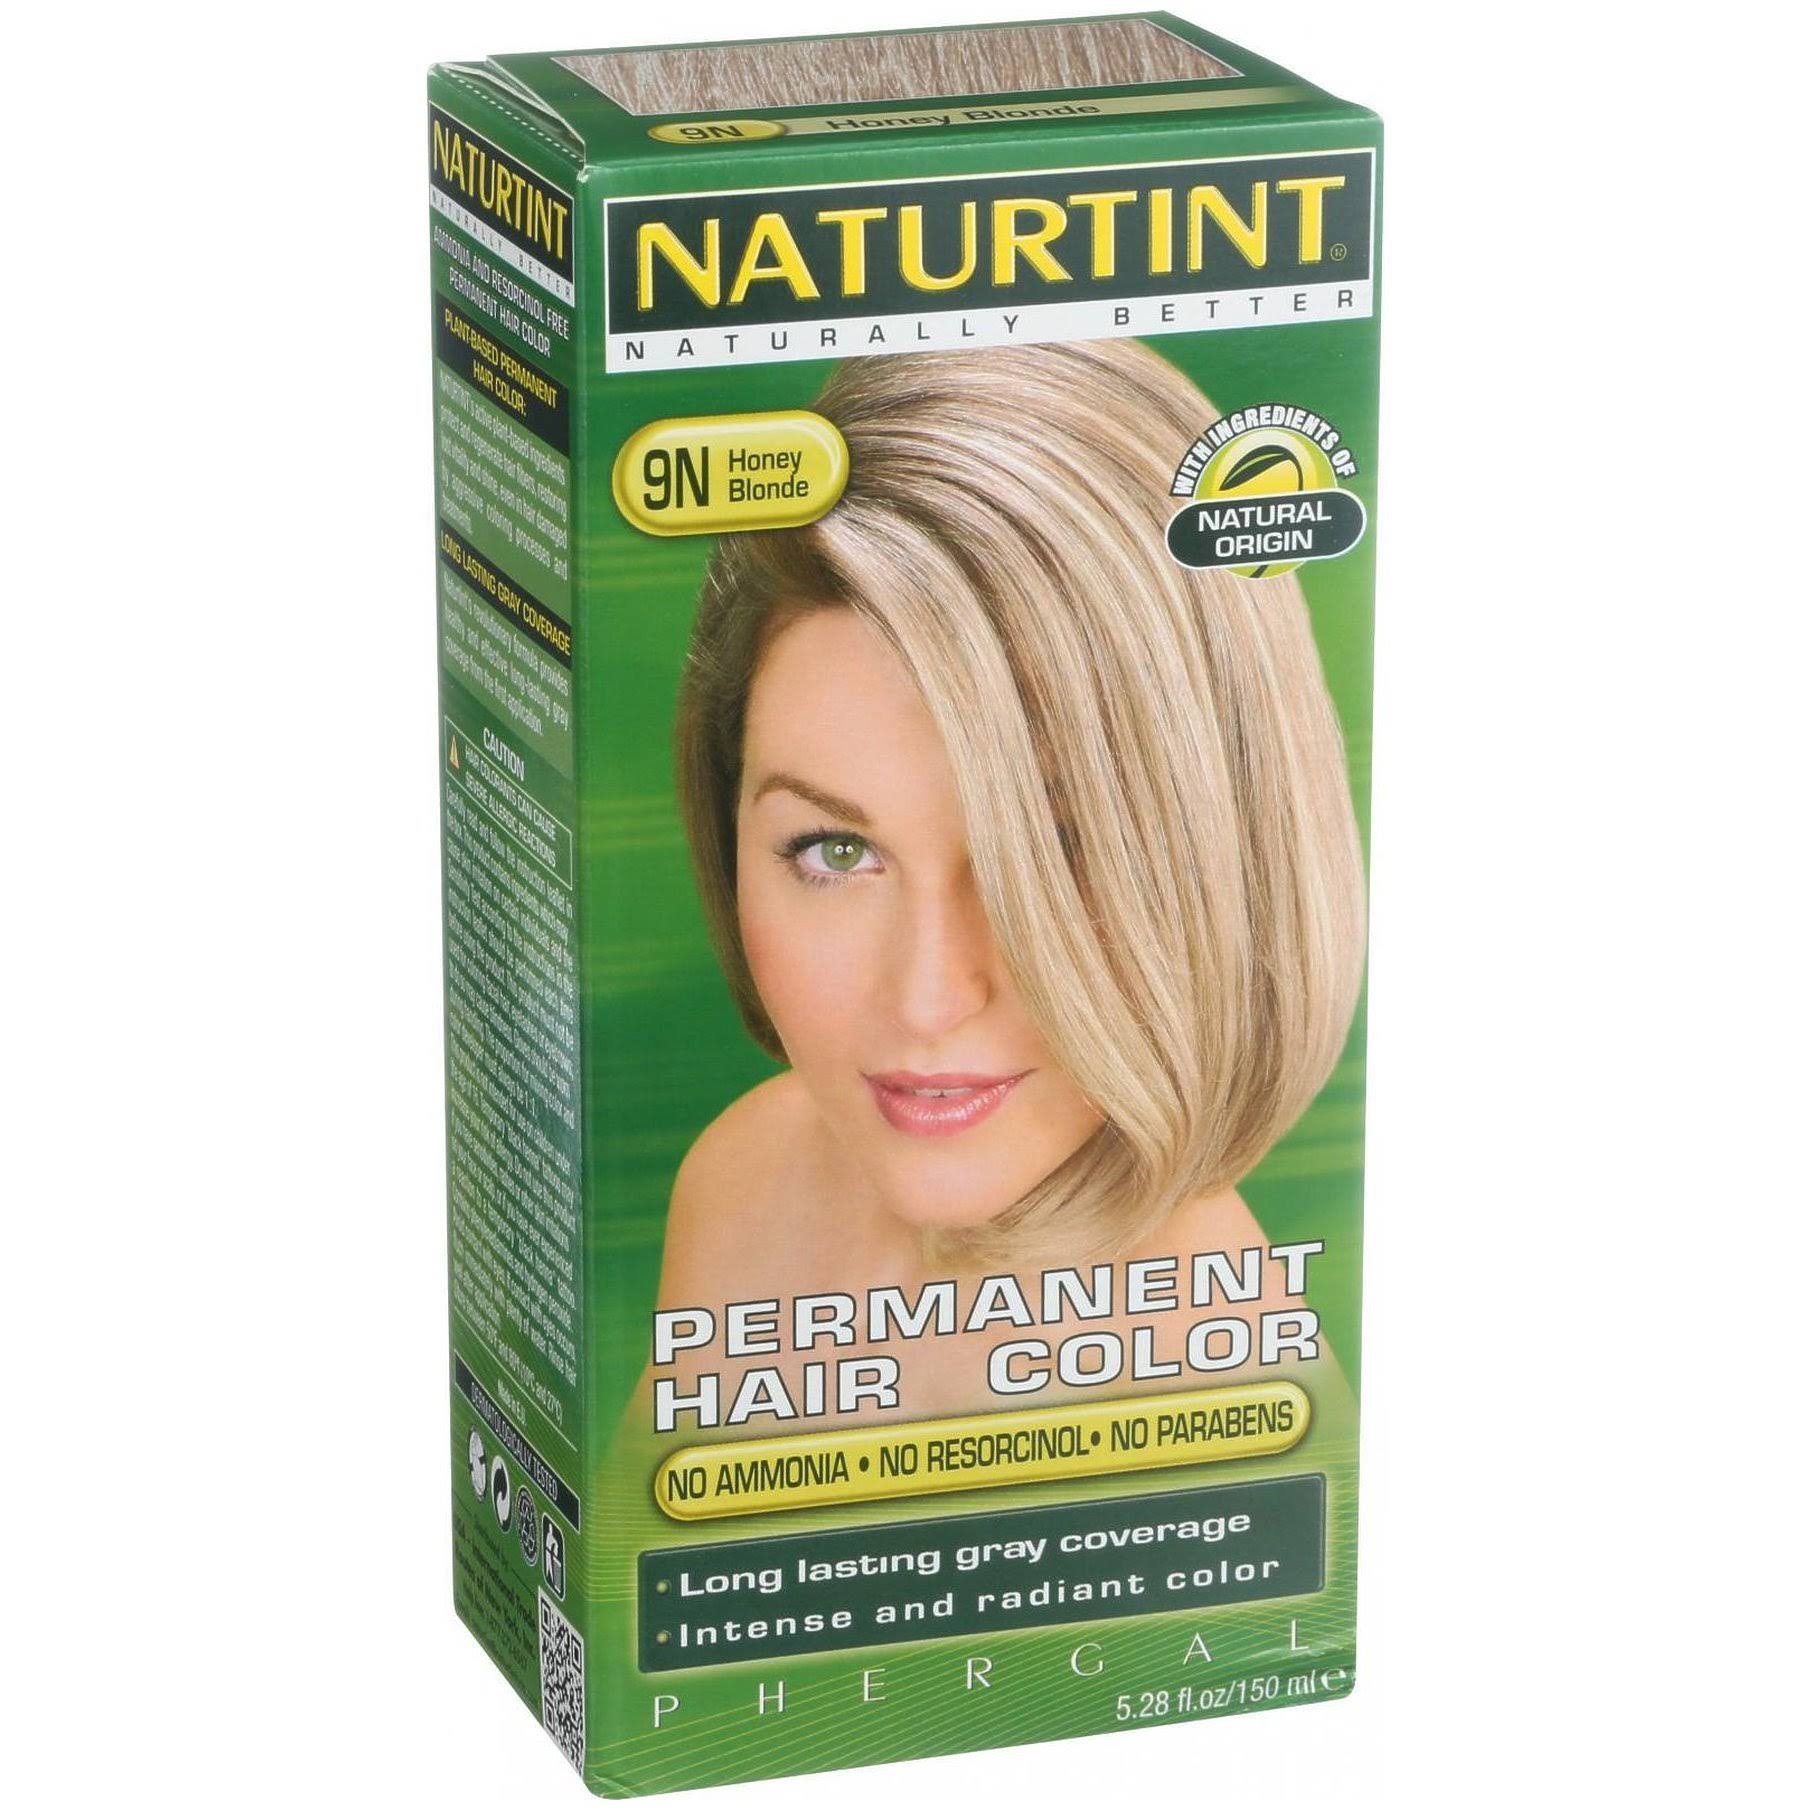 Naturtint Naturally Better Permanent Hair Colour - 9N Honey Blonde, 165ml